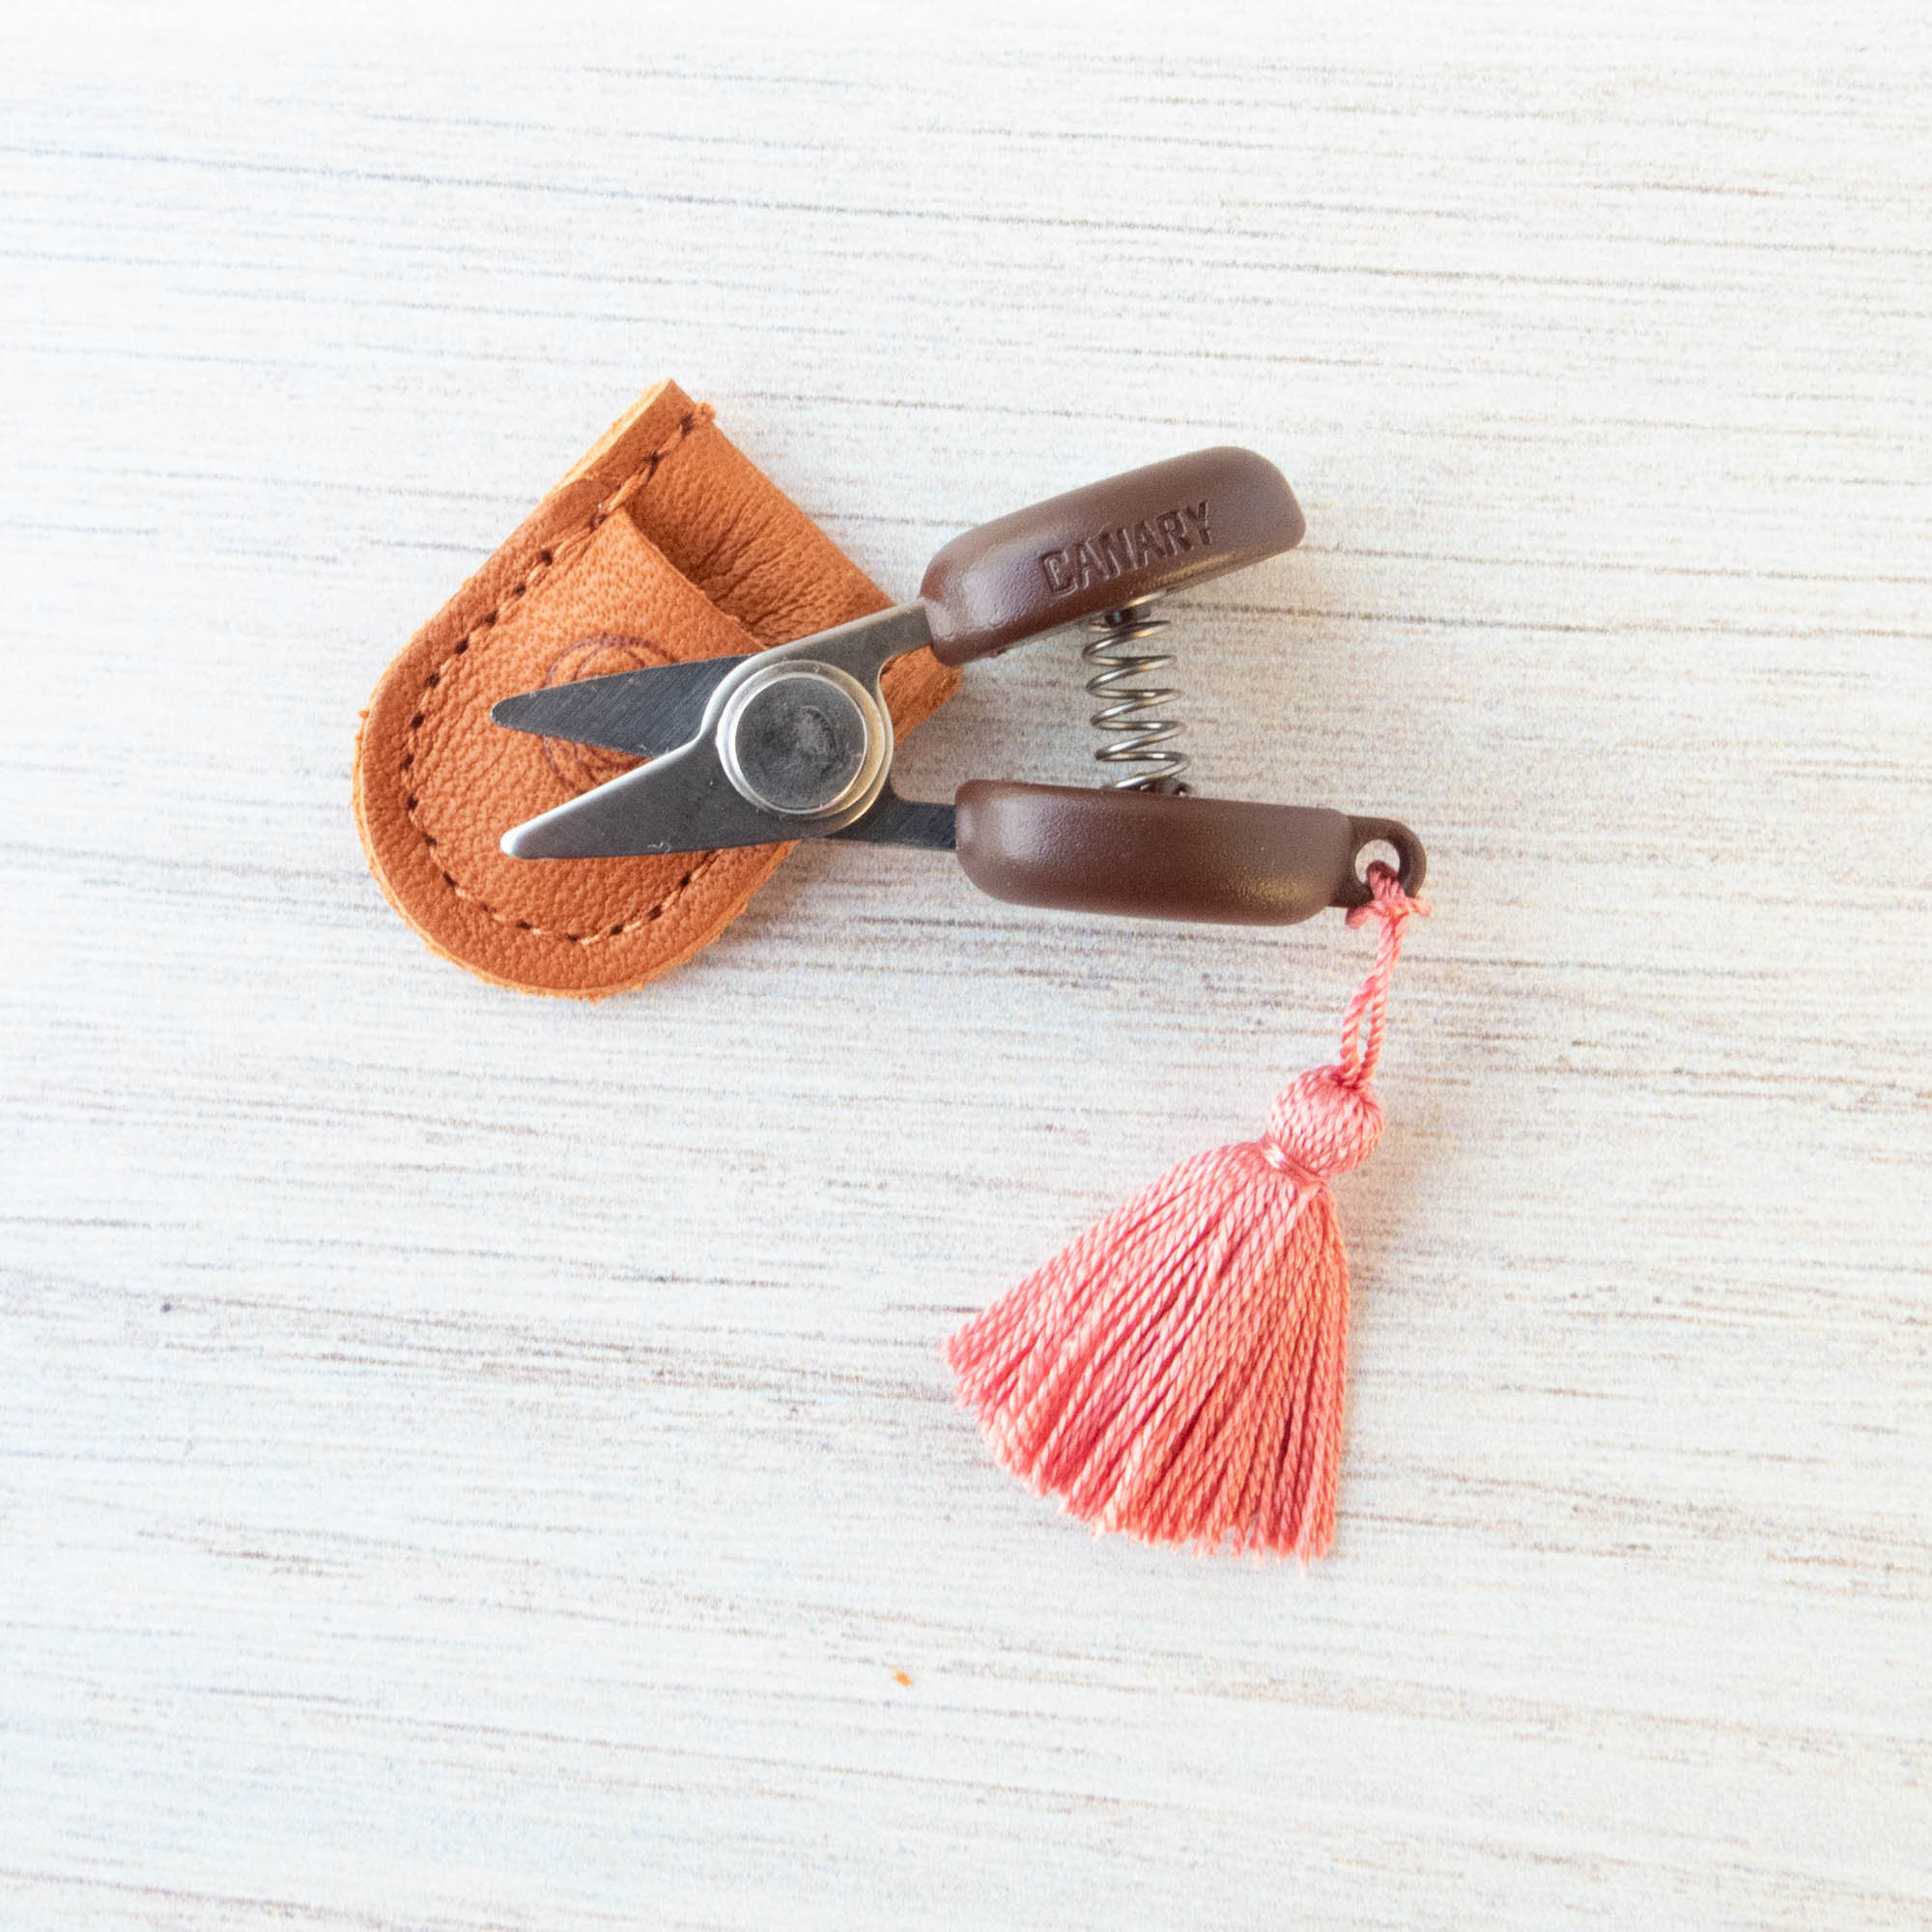 Japanese Thread Snips Embroidery Scissors, Sewing Scissors, Thread Clipper  Clover Kuroha Thread Snips for Sewing Embroidery Cross Stitch 